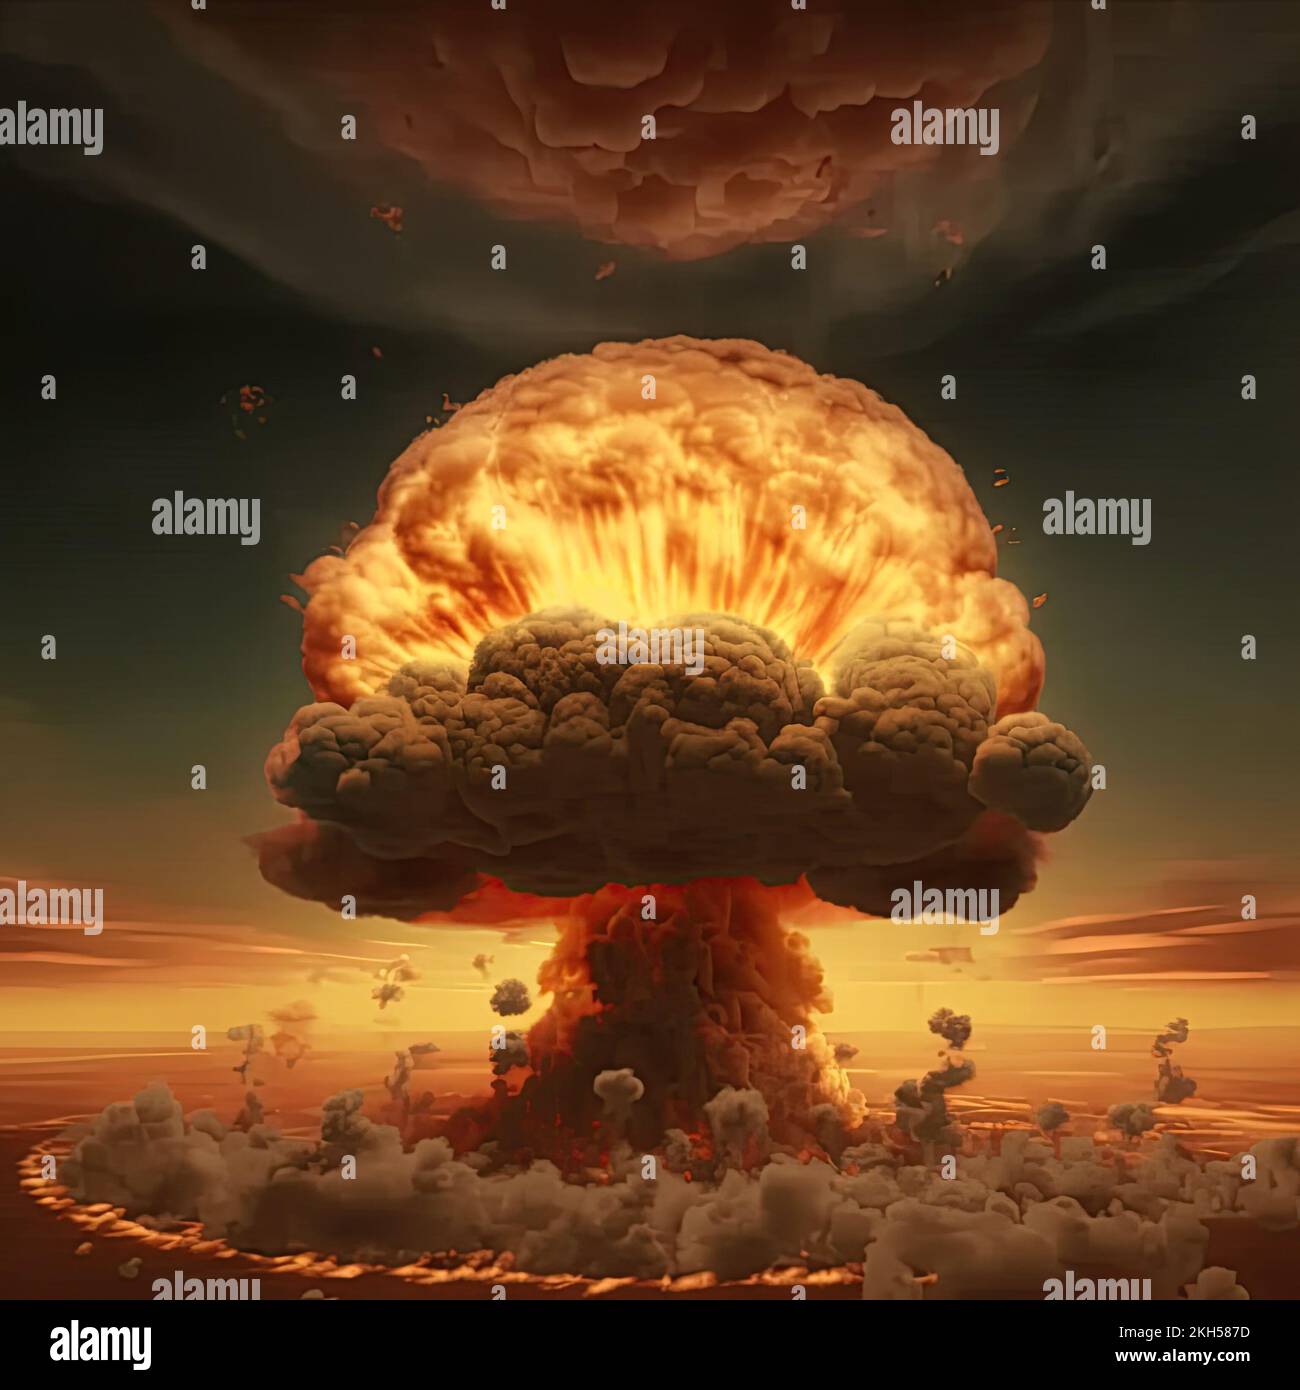 A nuclear explosion in the skyline creates a nuclear fire mushroom cloud in an apocalyptic war. 3D illustration. Stock Photo